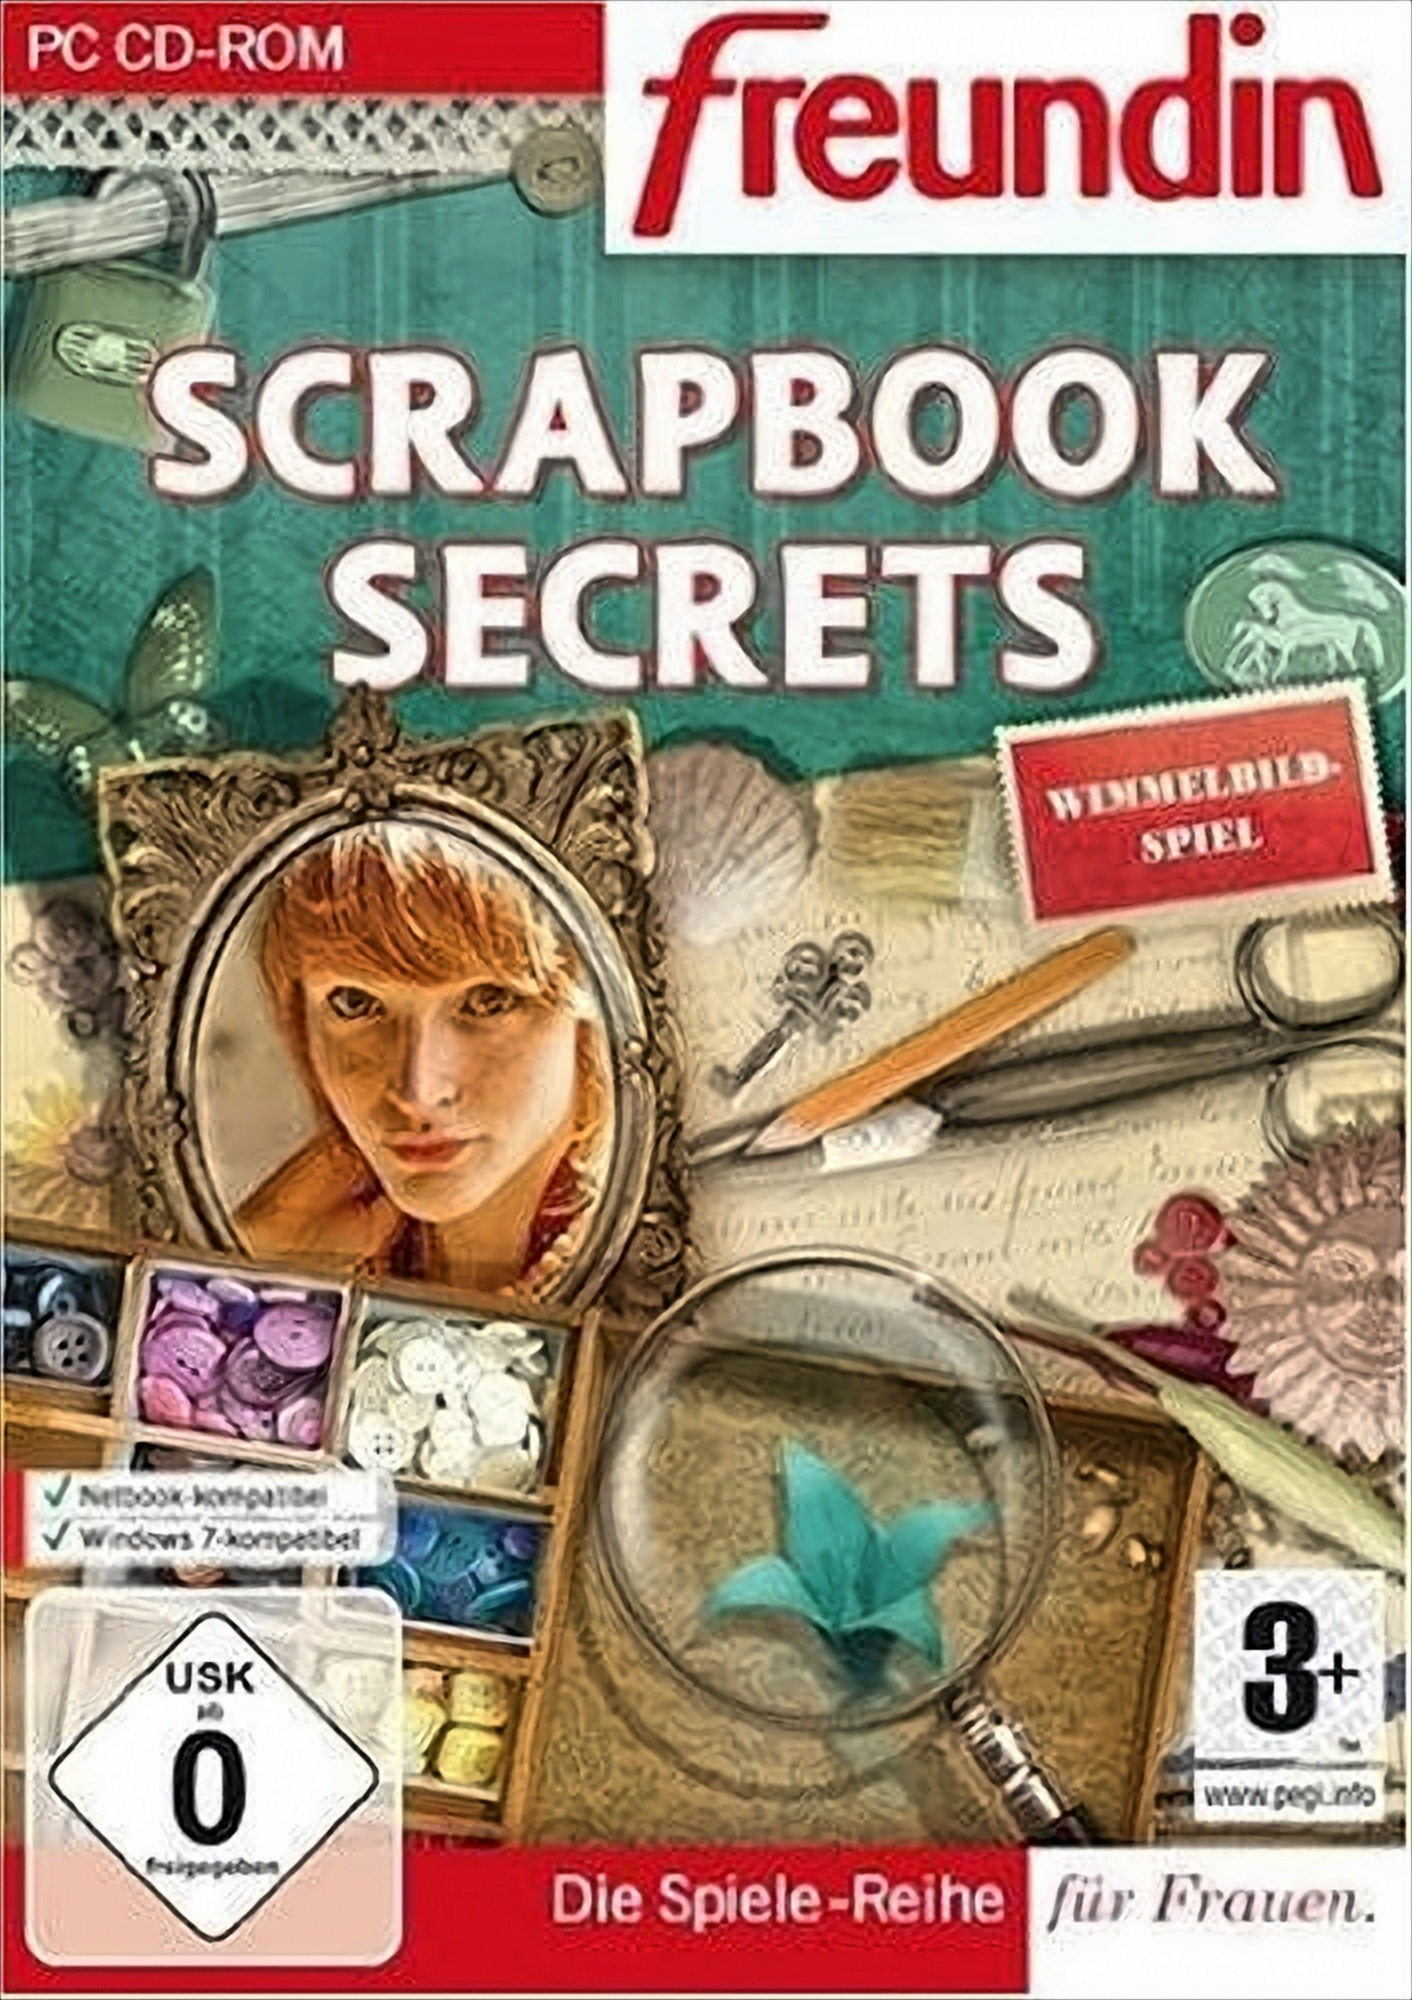 Scrapbook Secrets - [PC